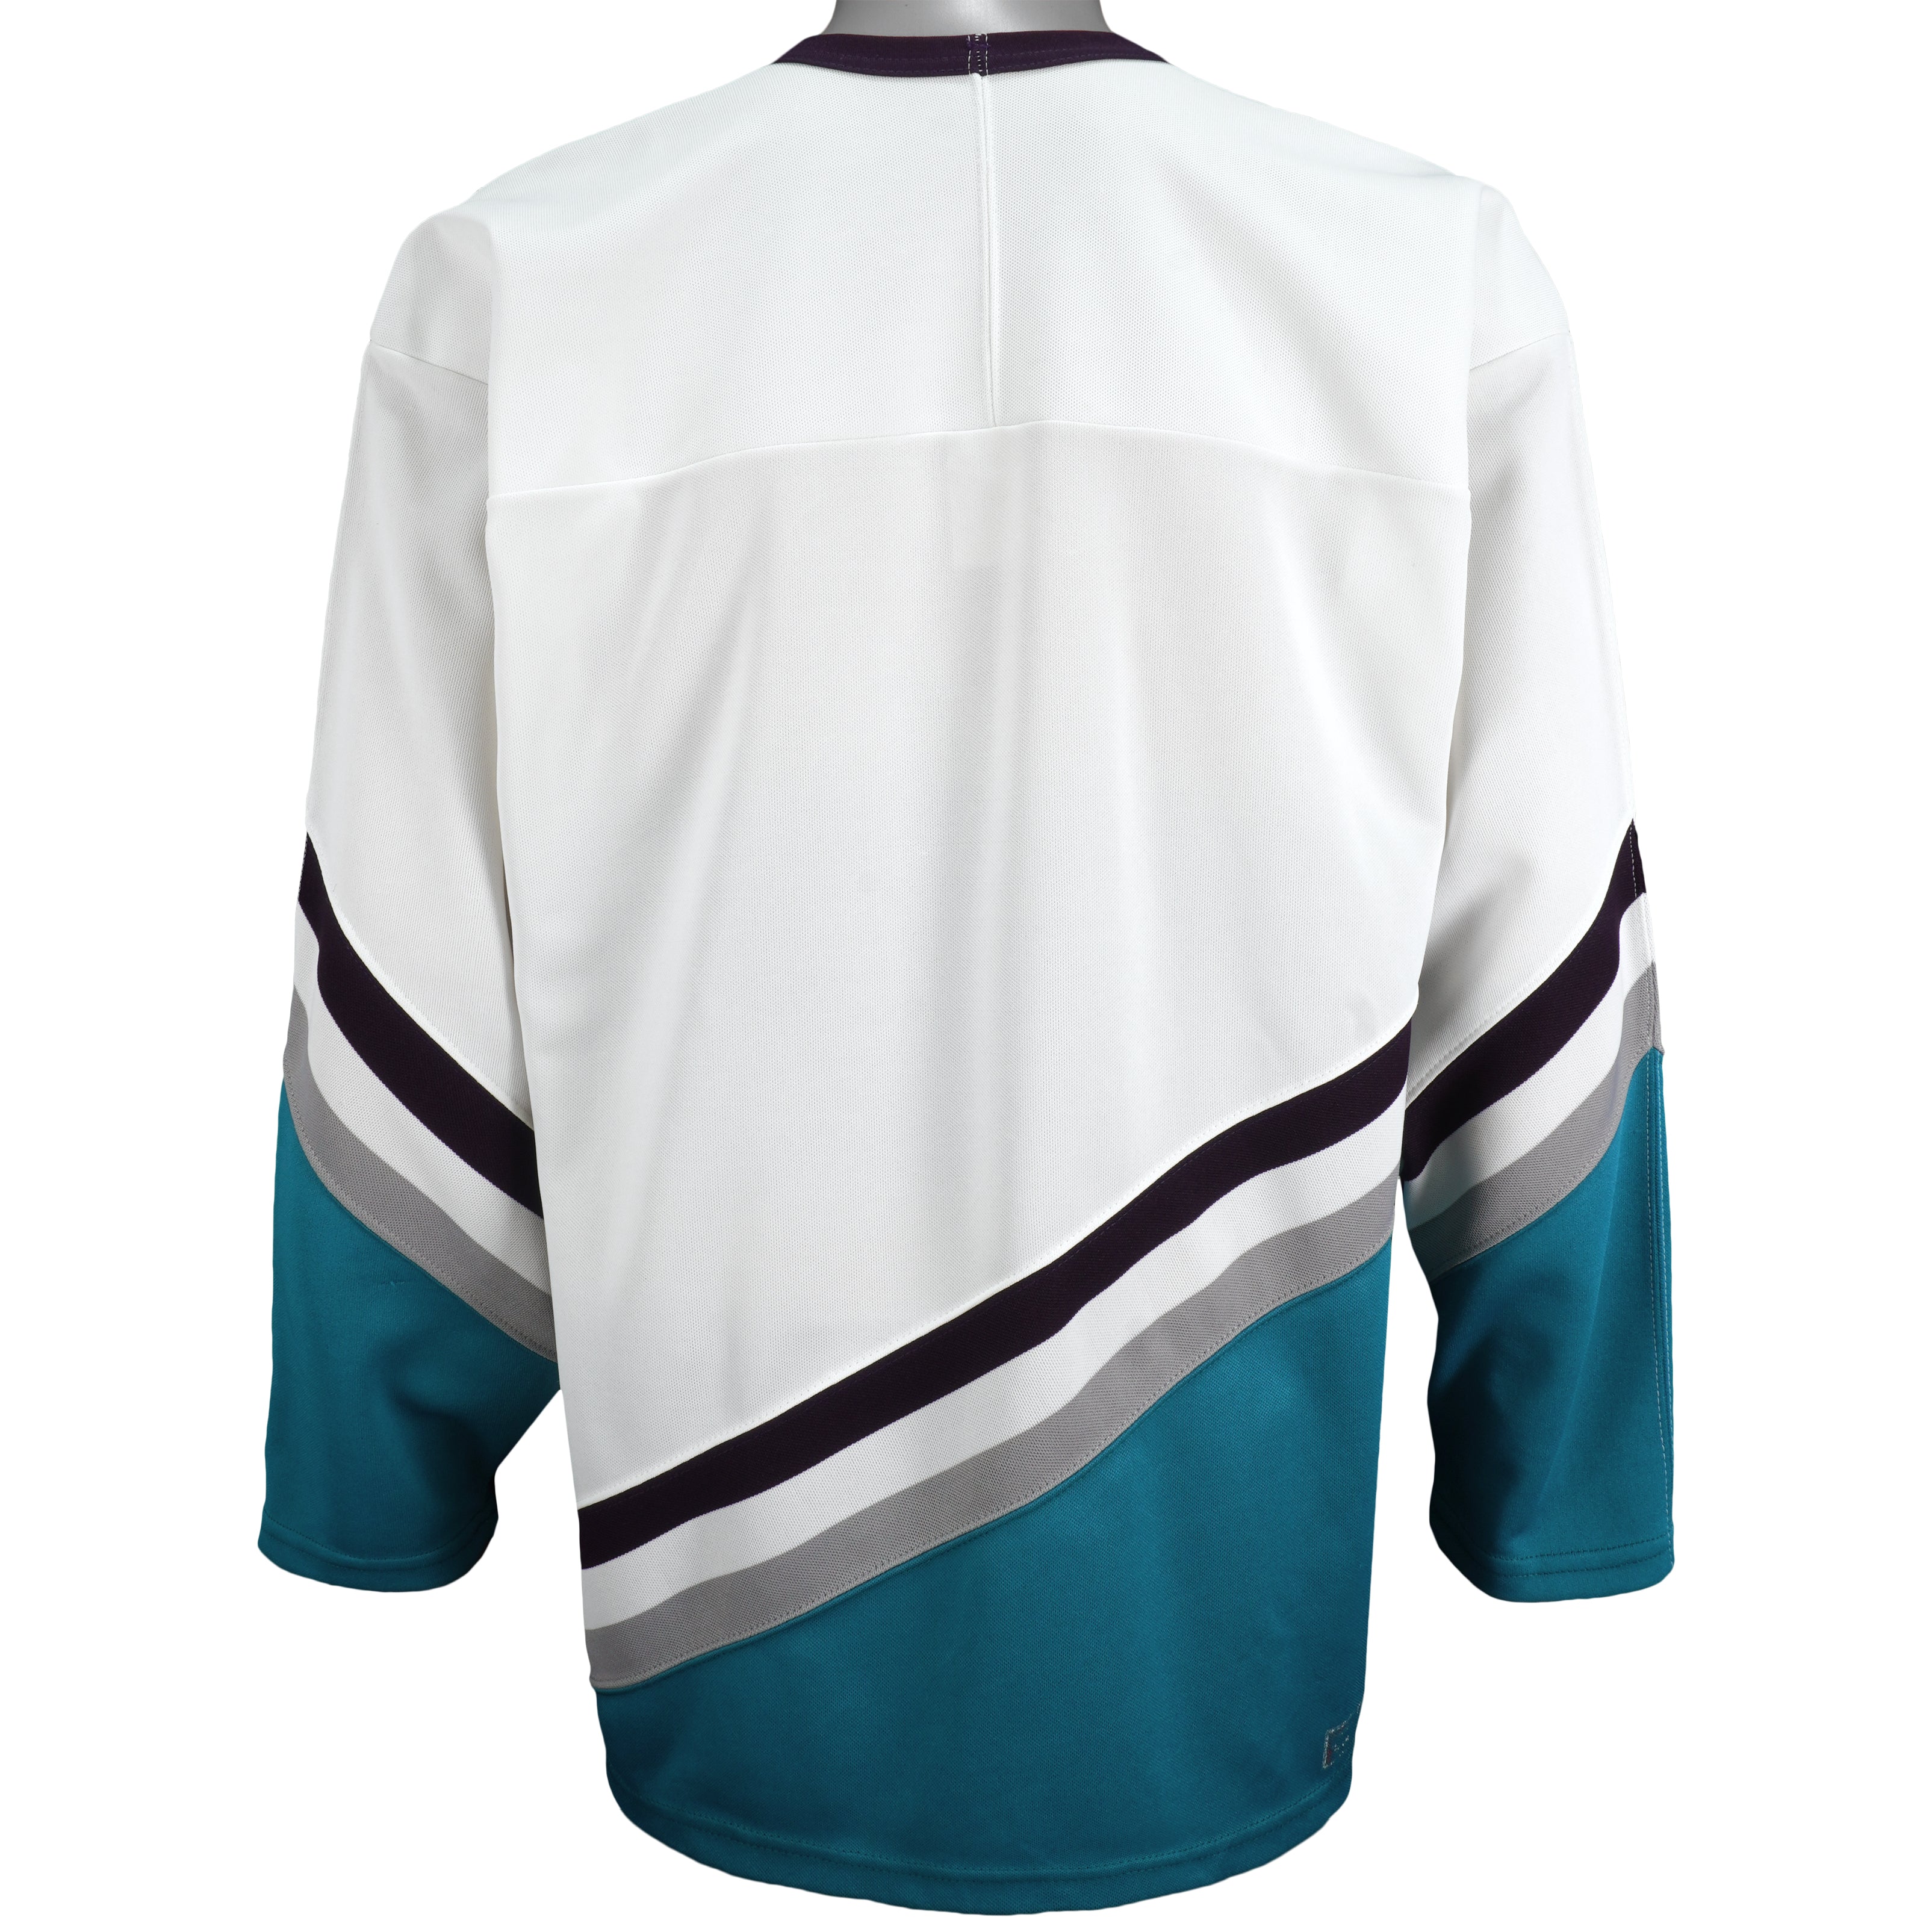 Anaheim Mighty Ducks Vintage 90s Starter Hockey Jersey White and Blue